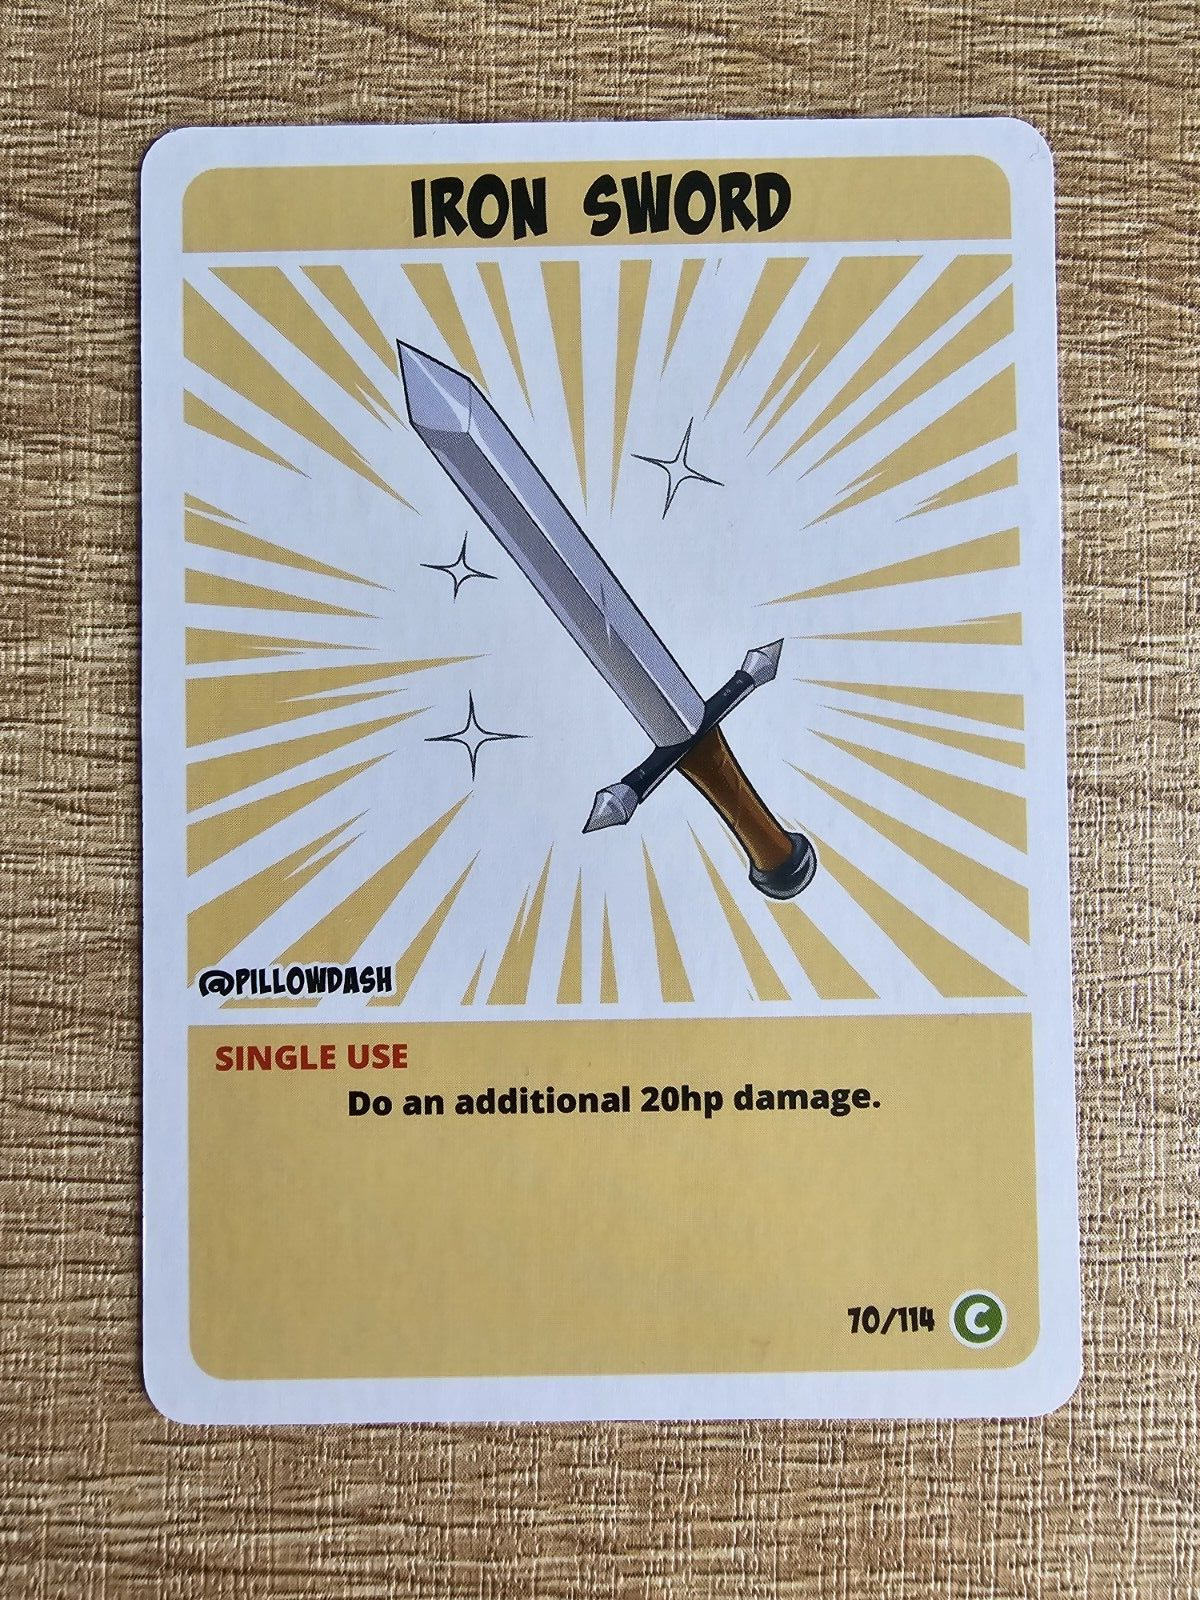 hermitcraft tcg card, effect - Iron Sword